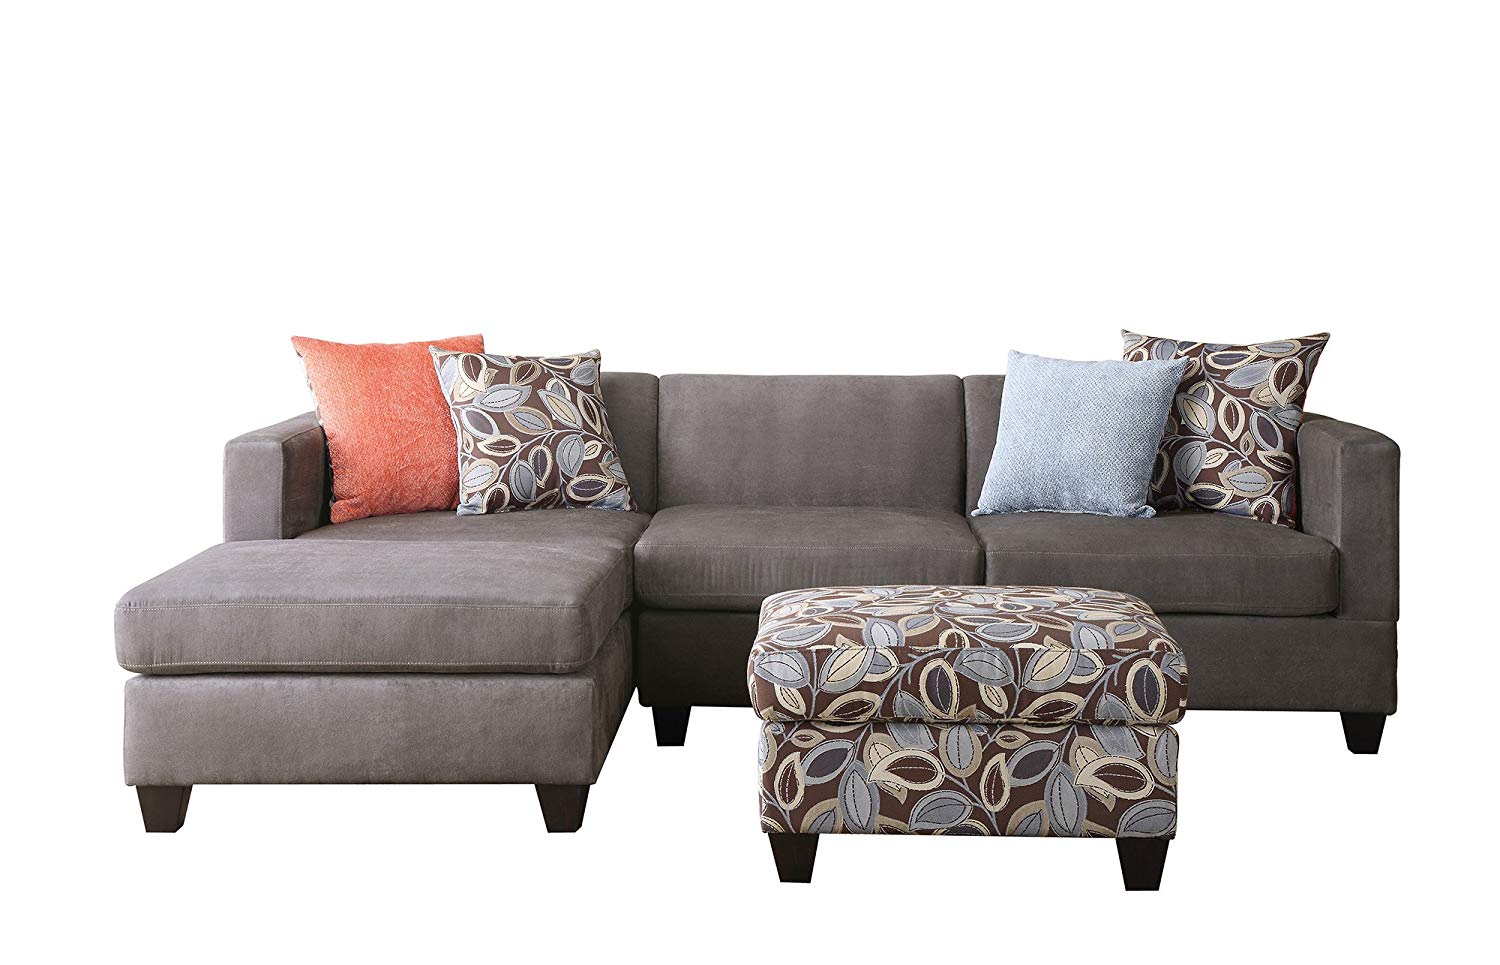 3 piece sectional sofa amazon.com: bobkona poundex simplistic collection 3-piece sectional sofa  with ottoman, charcoal: kitchen ELLZOAE